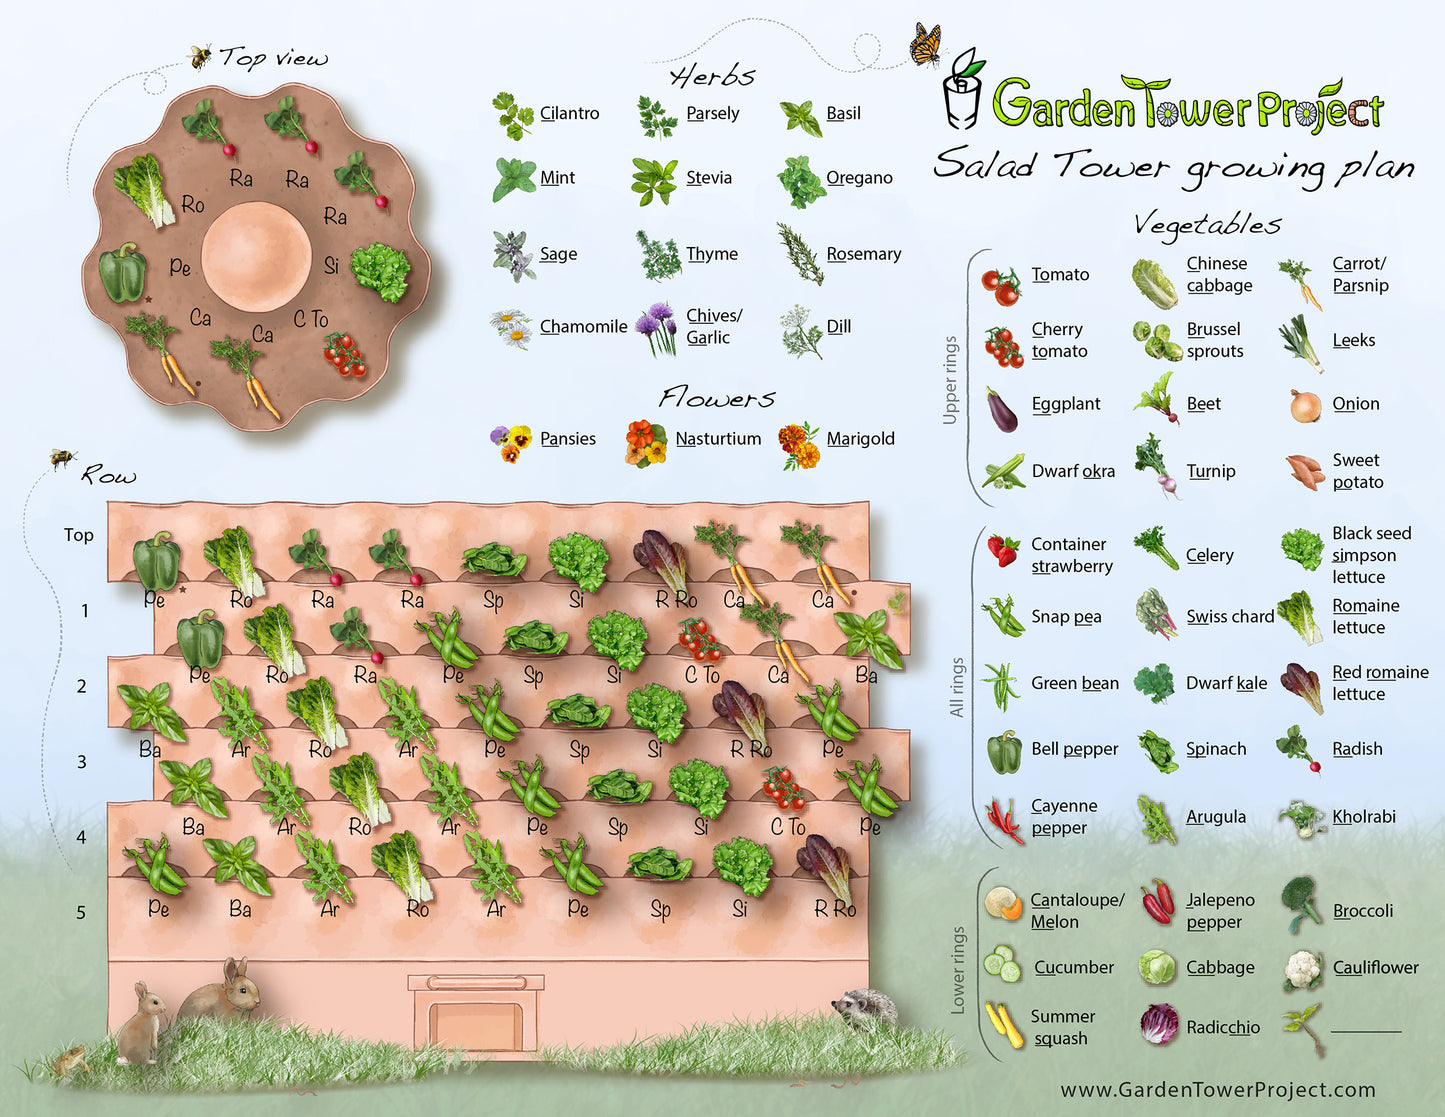 Garden Tower 2™, 50-Plant Composting Vertical Garden Planter by Garden Tower Project